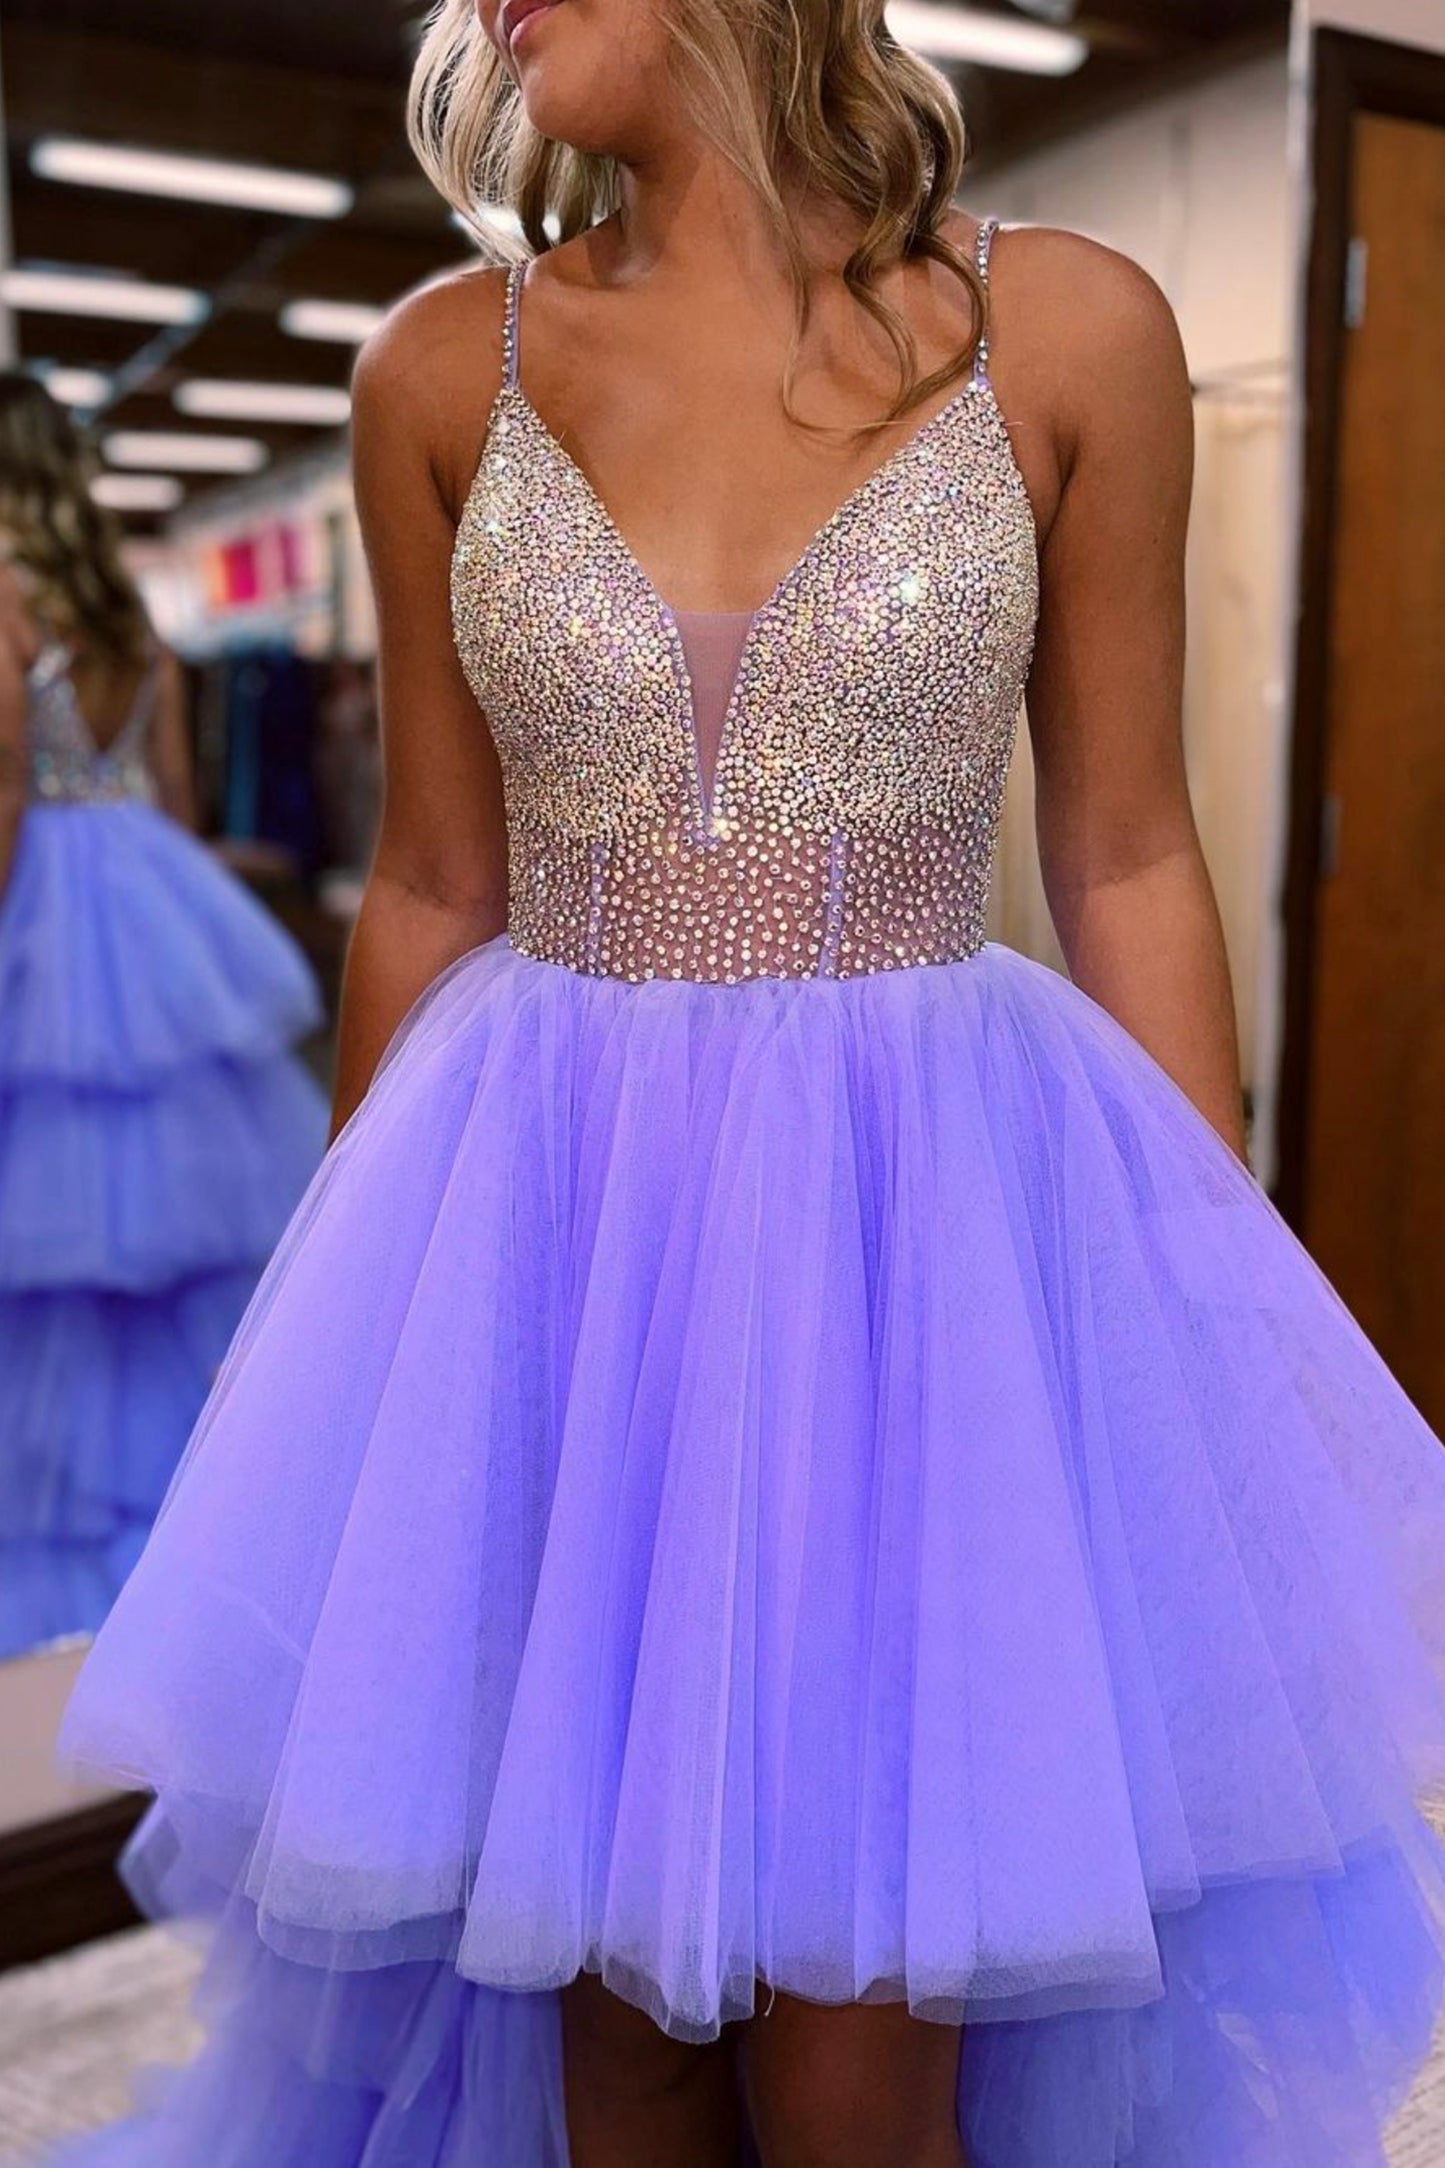 Purple V-Neck Tulle Long Prom Dresses, A-Line Beading Evening Dresses